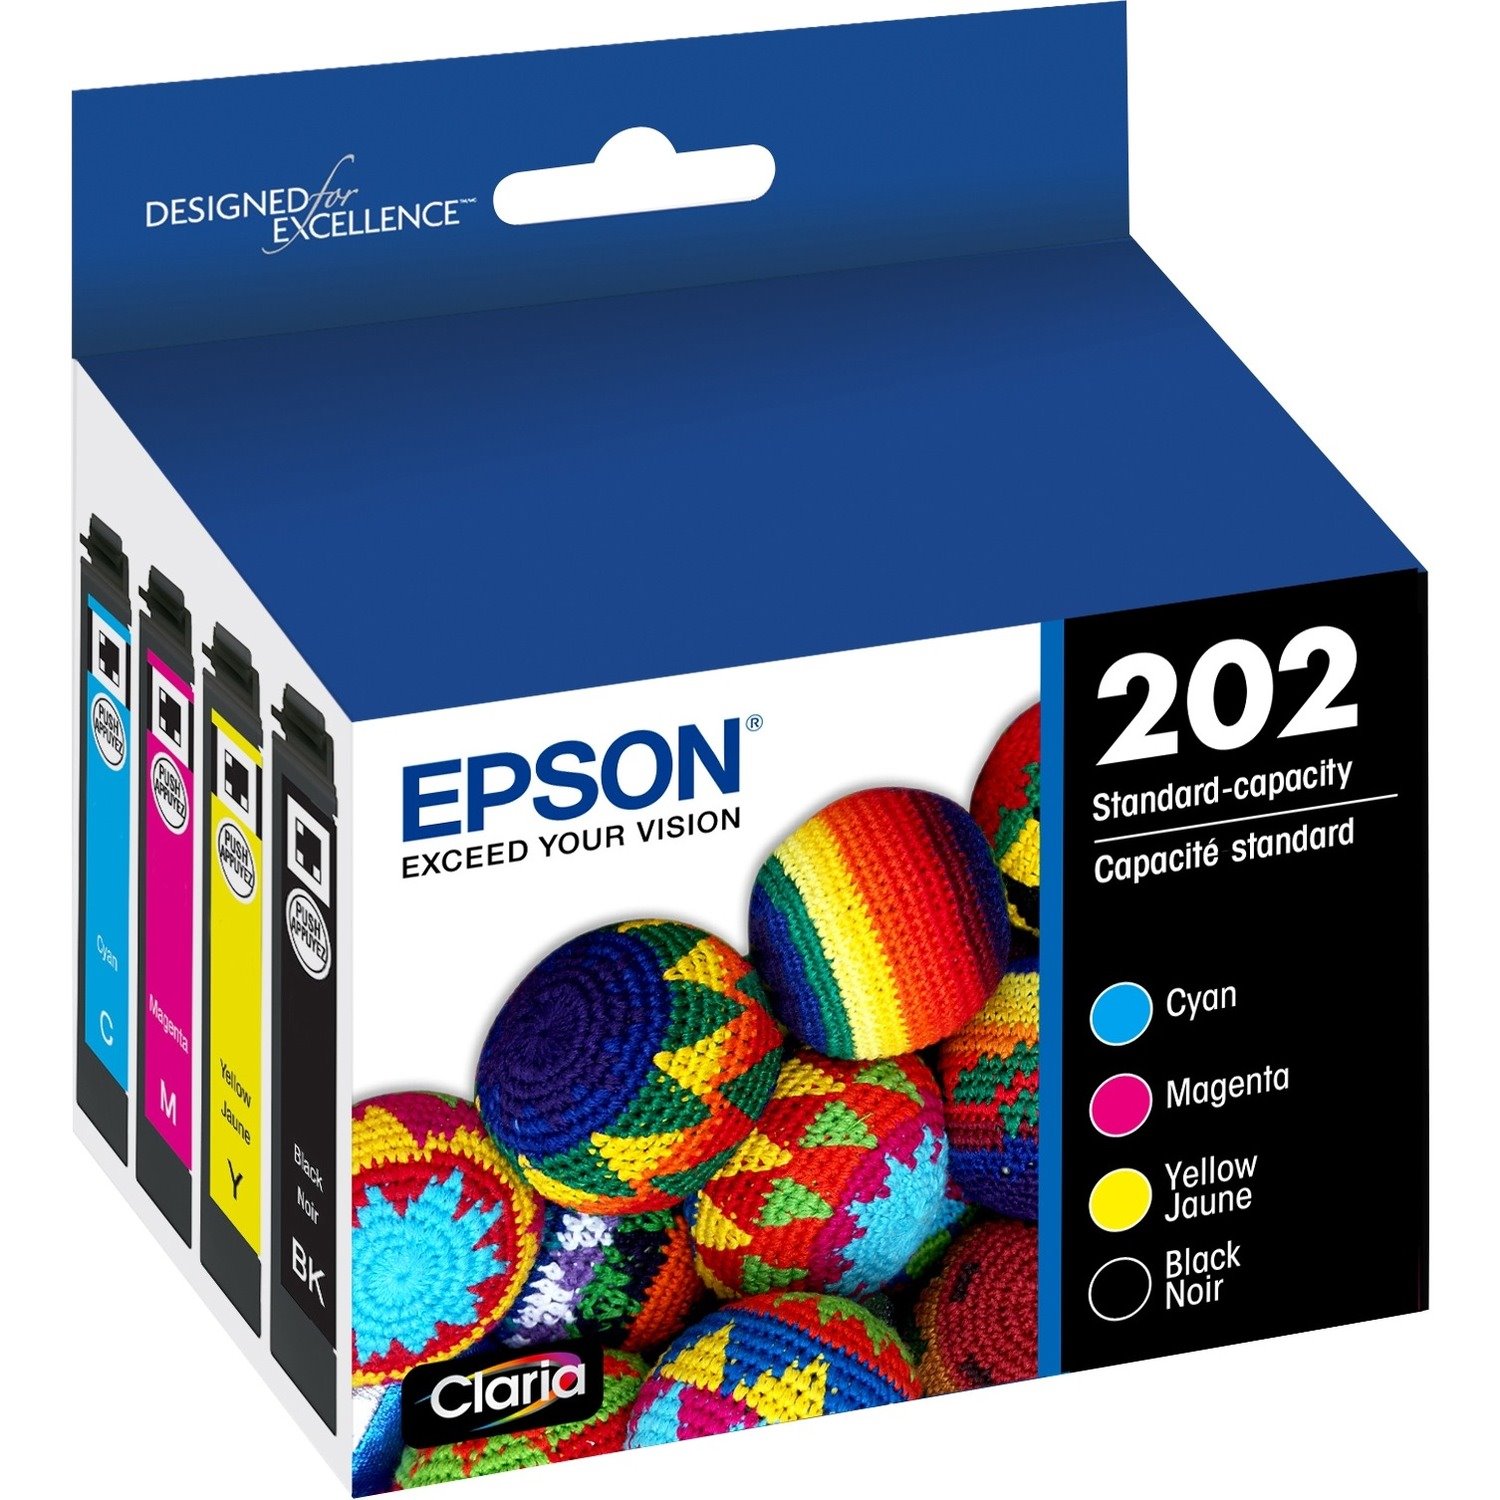 Epson DURABrite Ultra Original Standard Yield Inkjet Ink Cartridge - Combo Pack - Cyan, Magenta, Yellow Pack